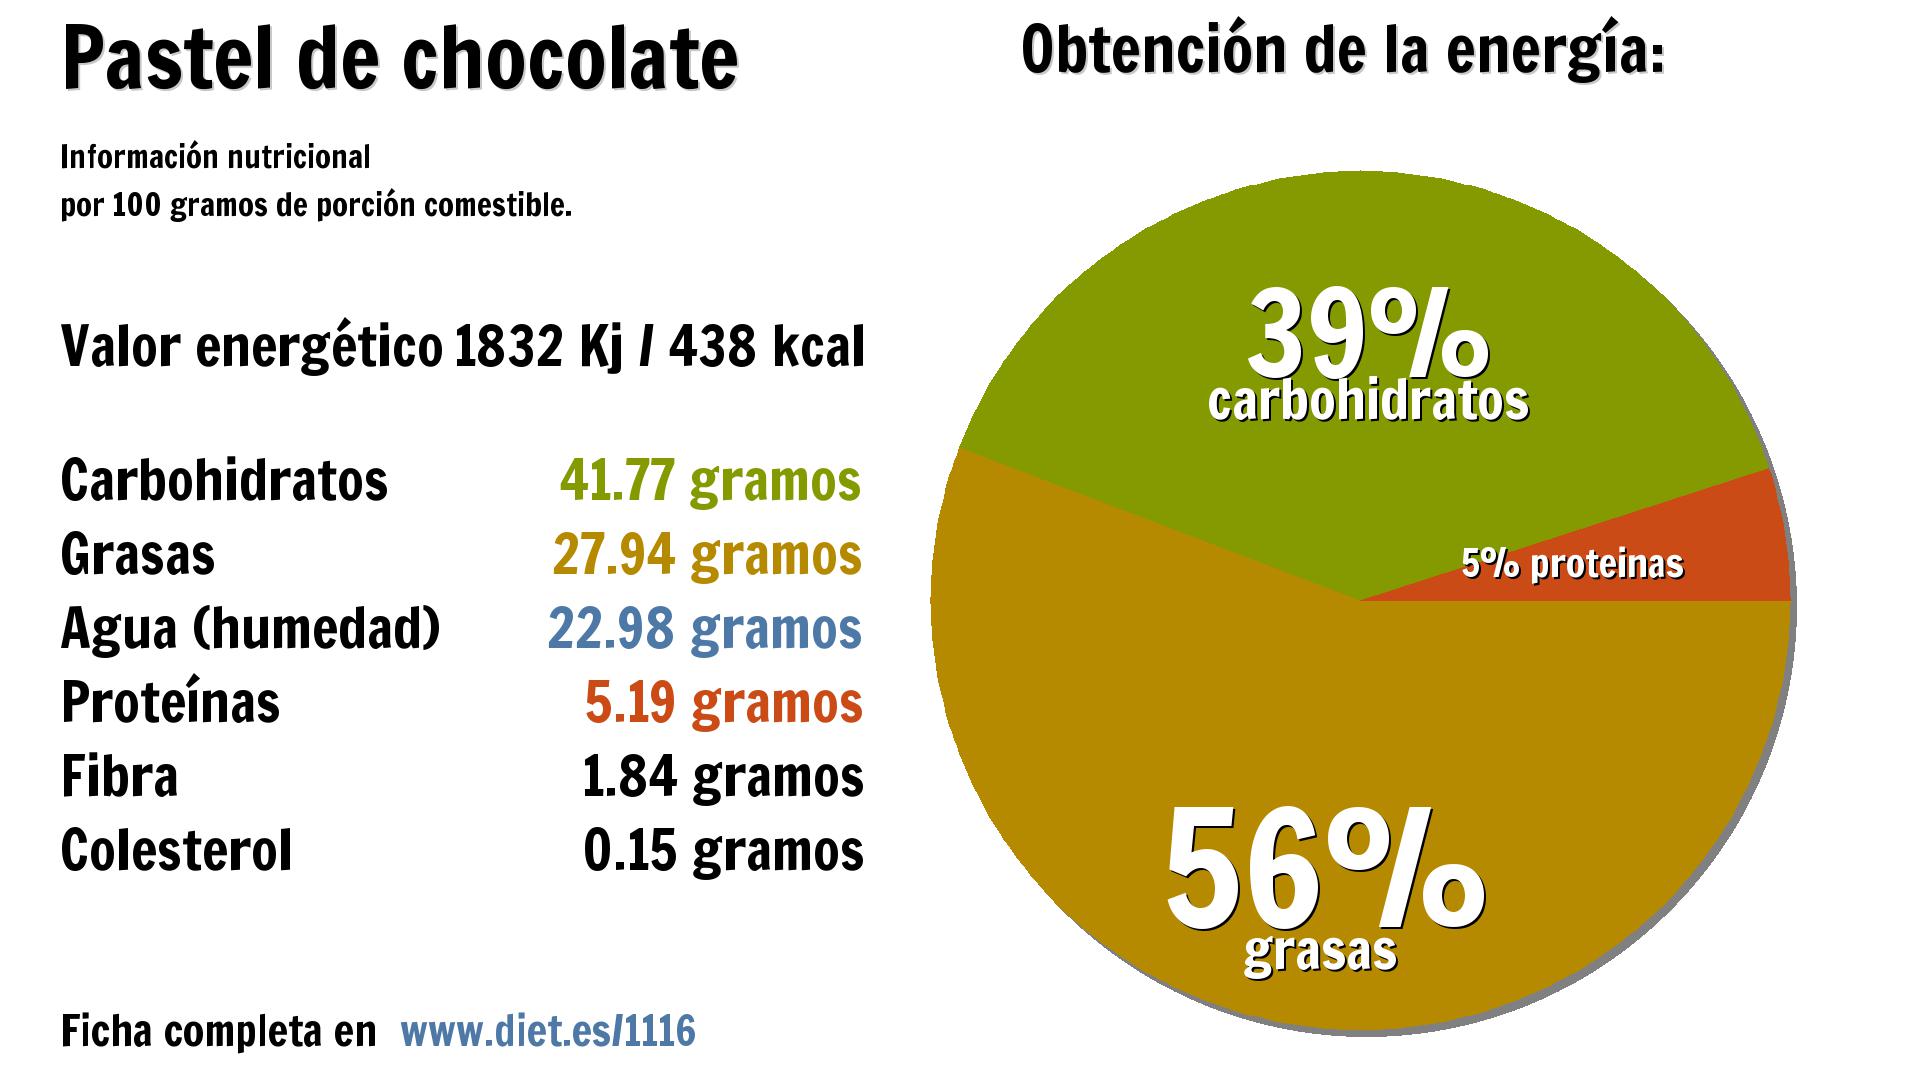 Pastel de chocolate: energía 1832 Kj, carbohidratos 42 g., grasas 28 g., agua 23 g., proteínas 5 g. y fibra 2 g.